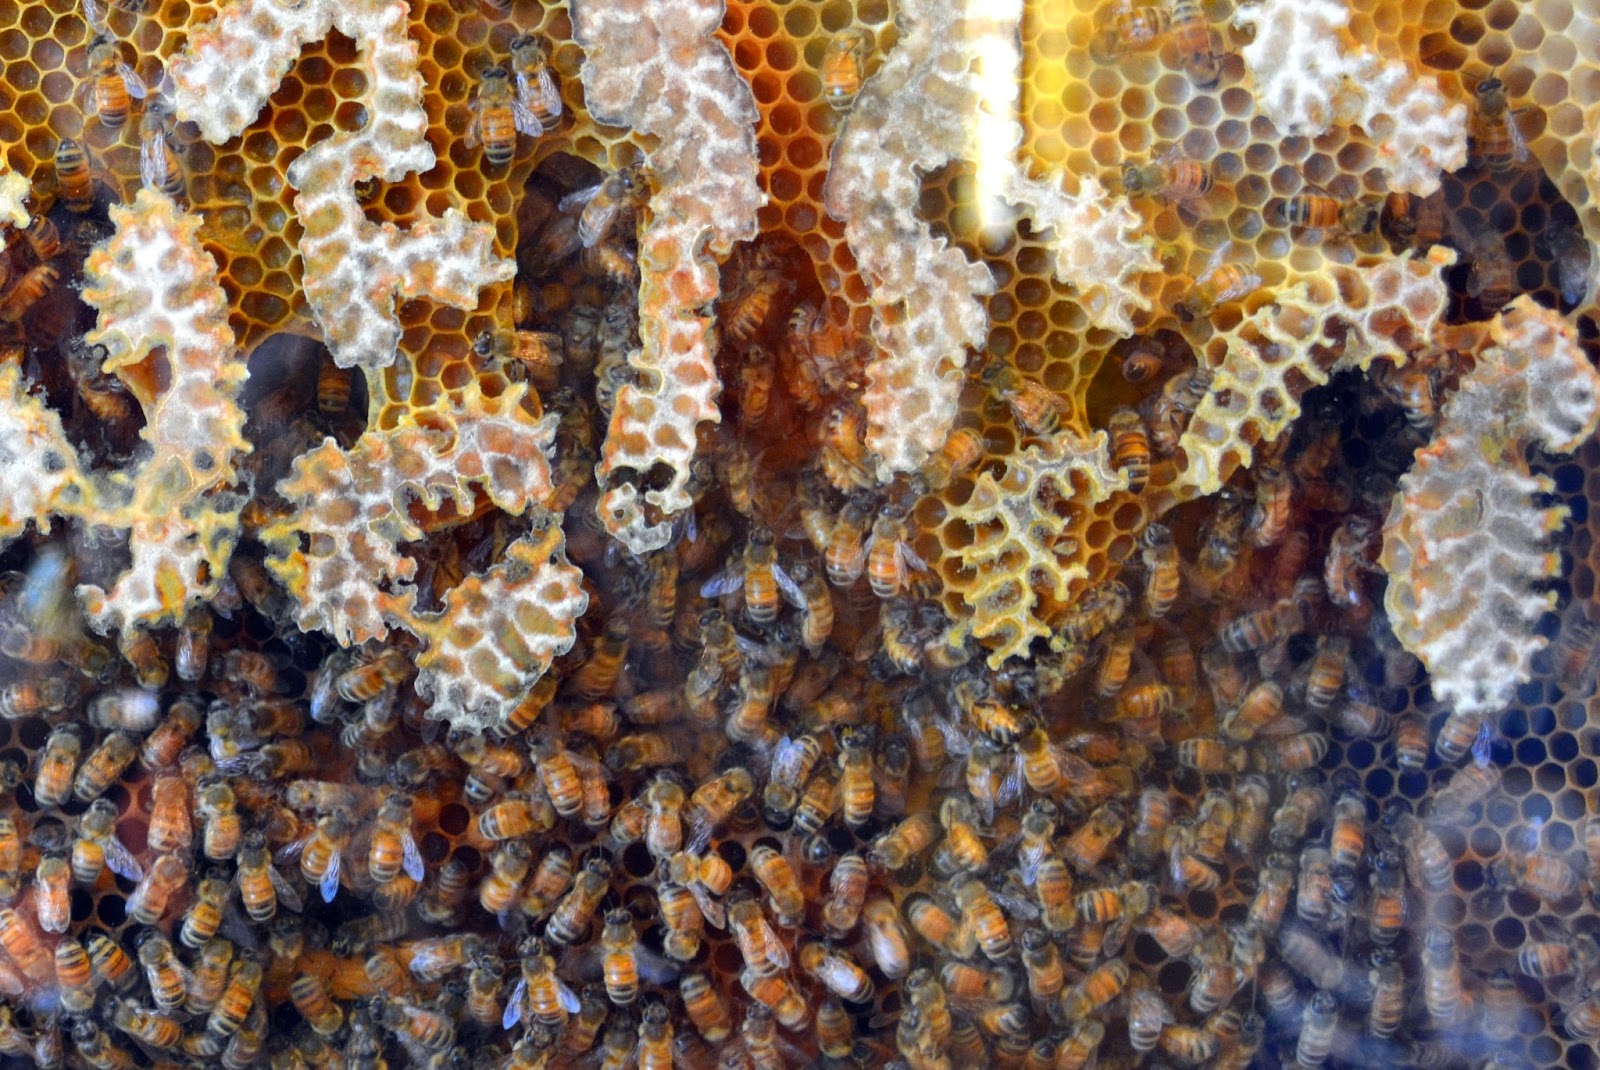 Honey Absinthe – Spirt Of The Hive